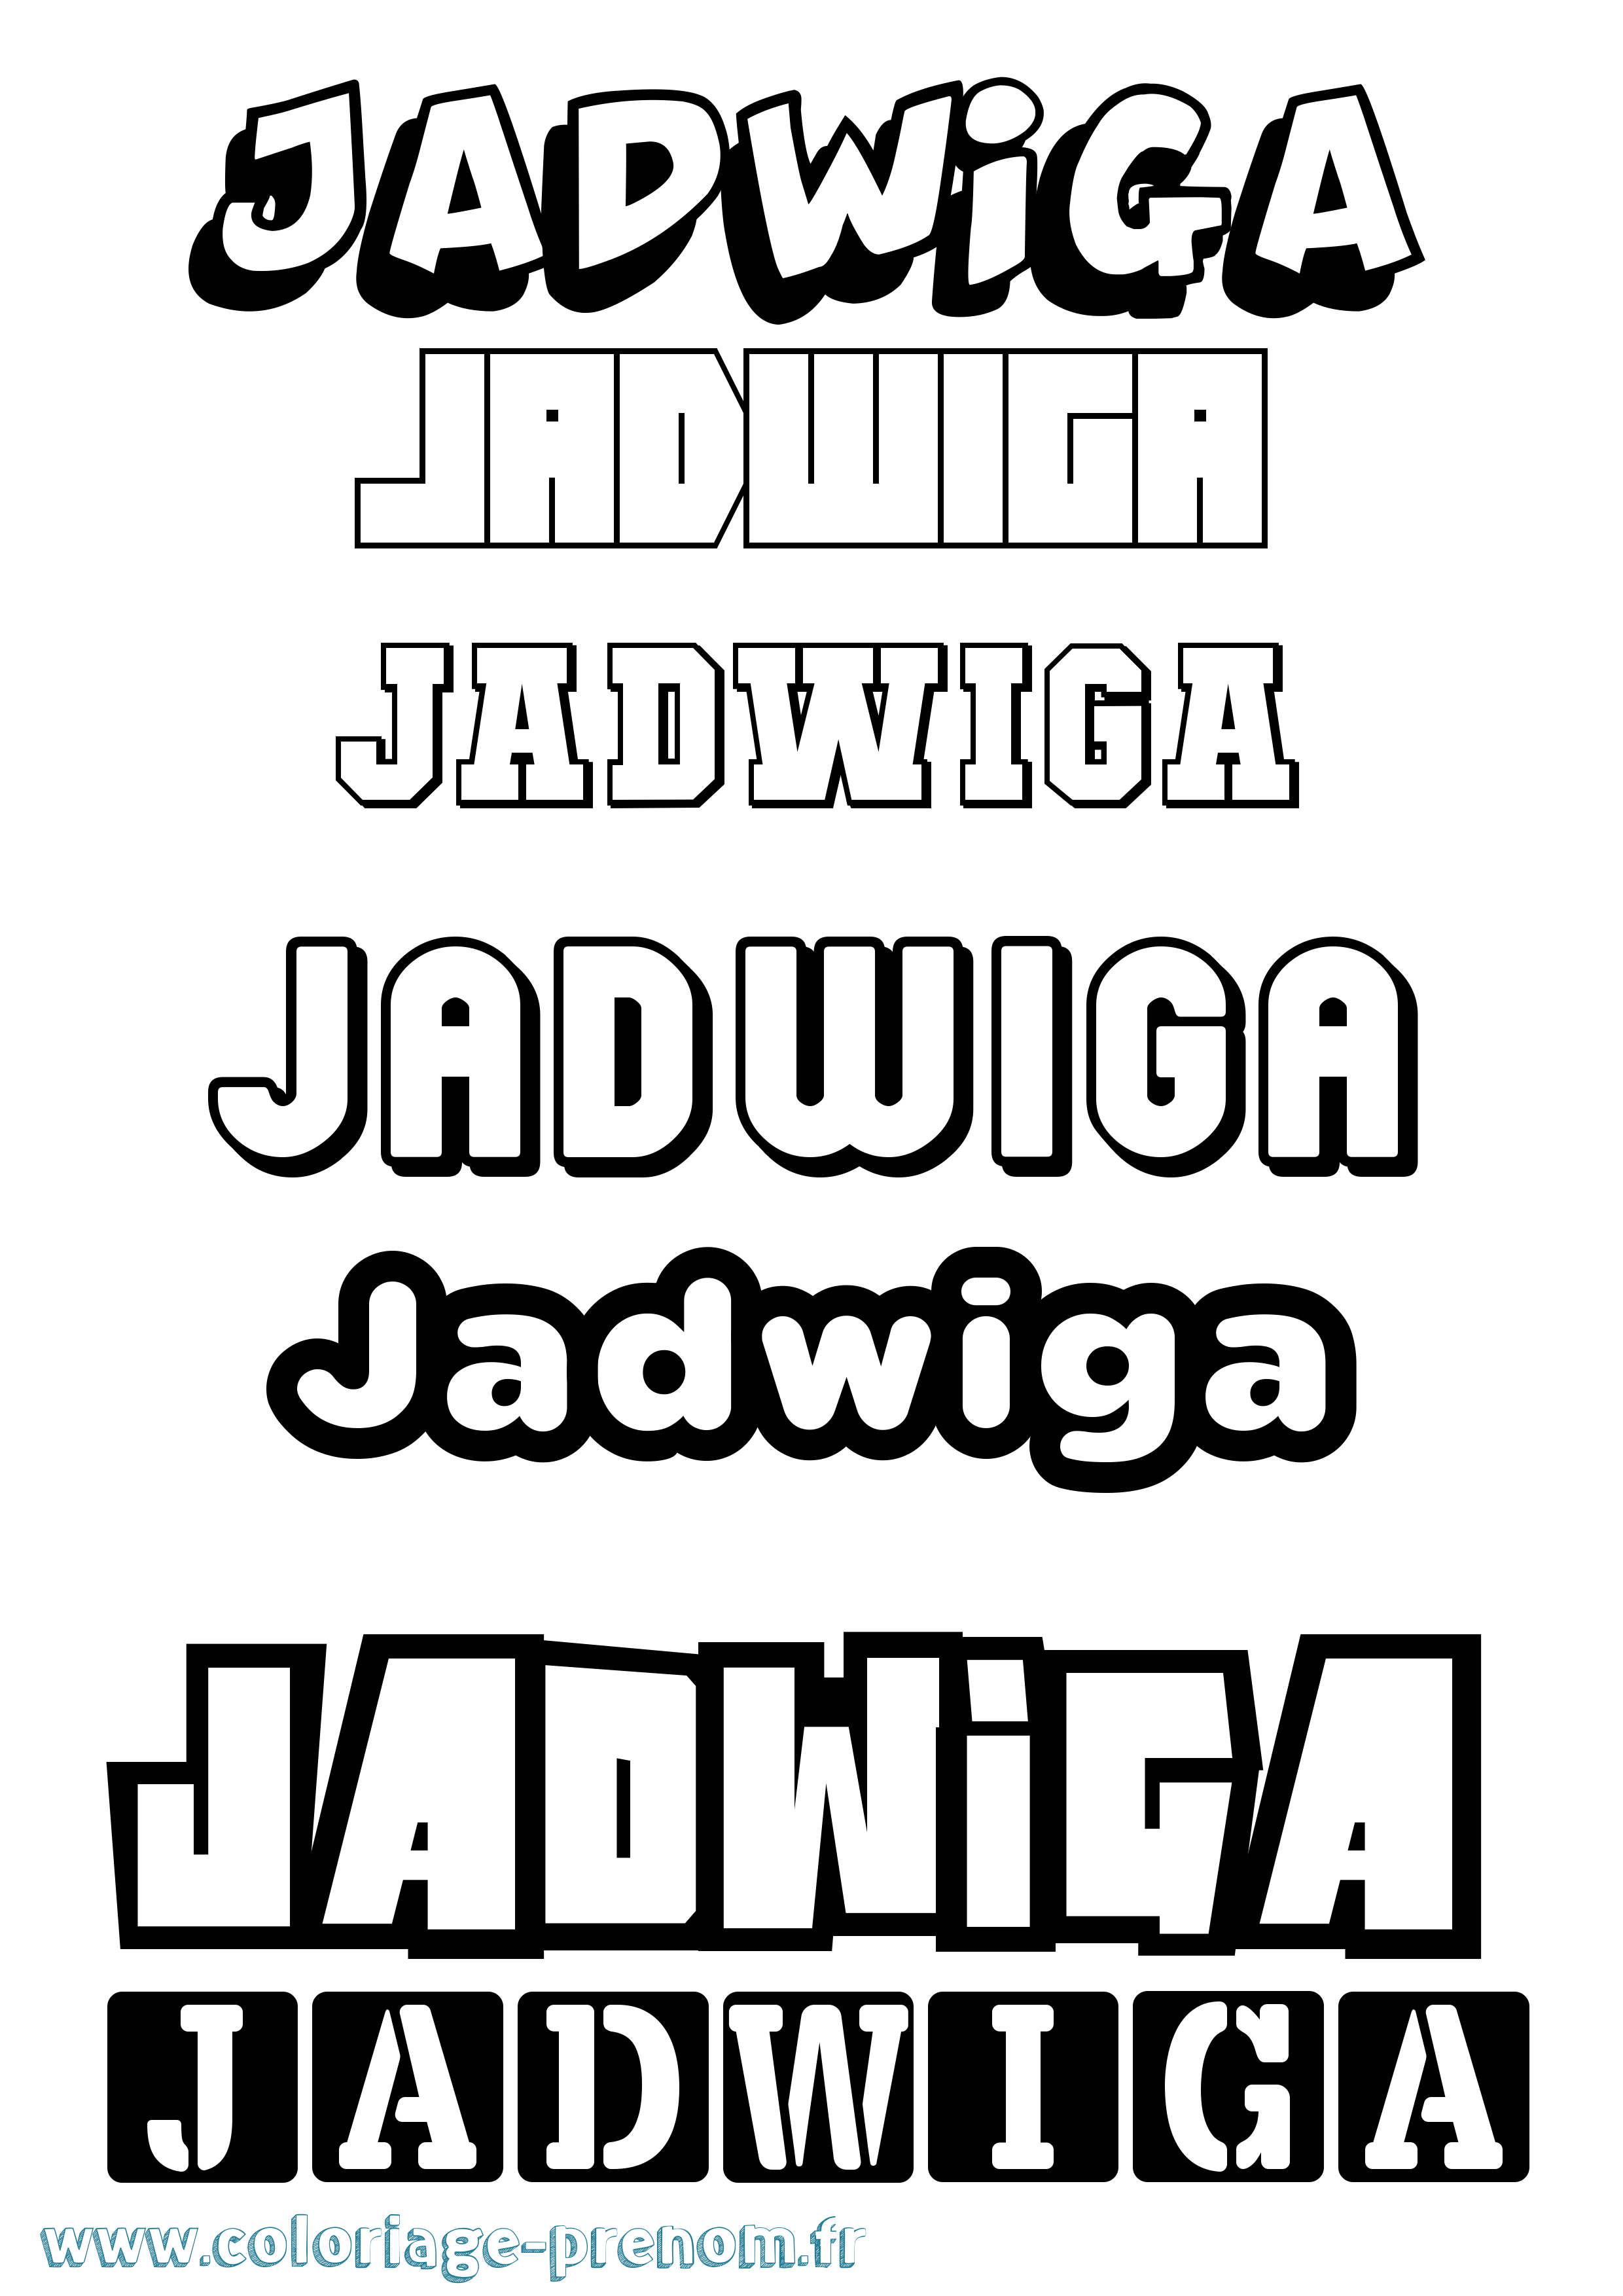 Coloriage prénom Jadwiga Simple